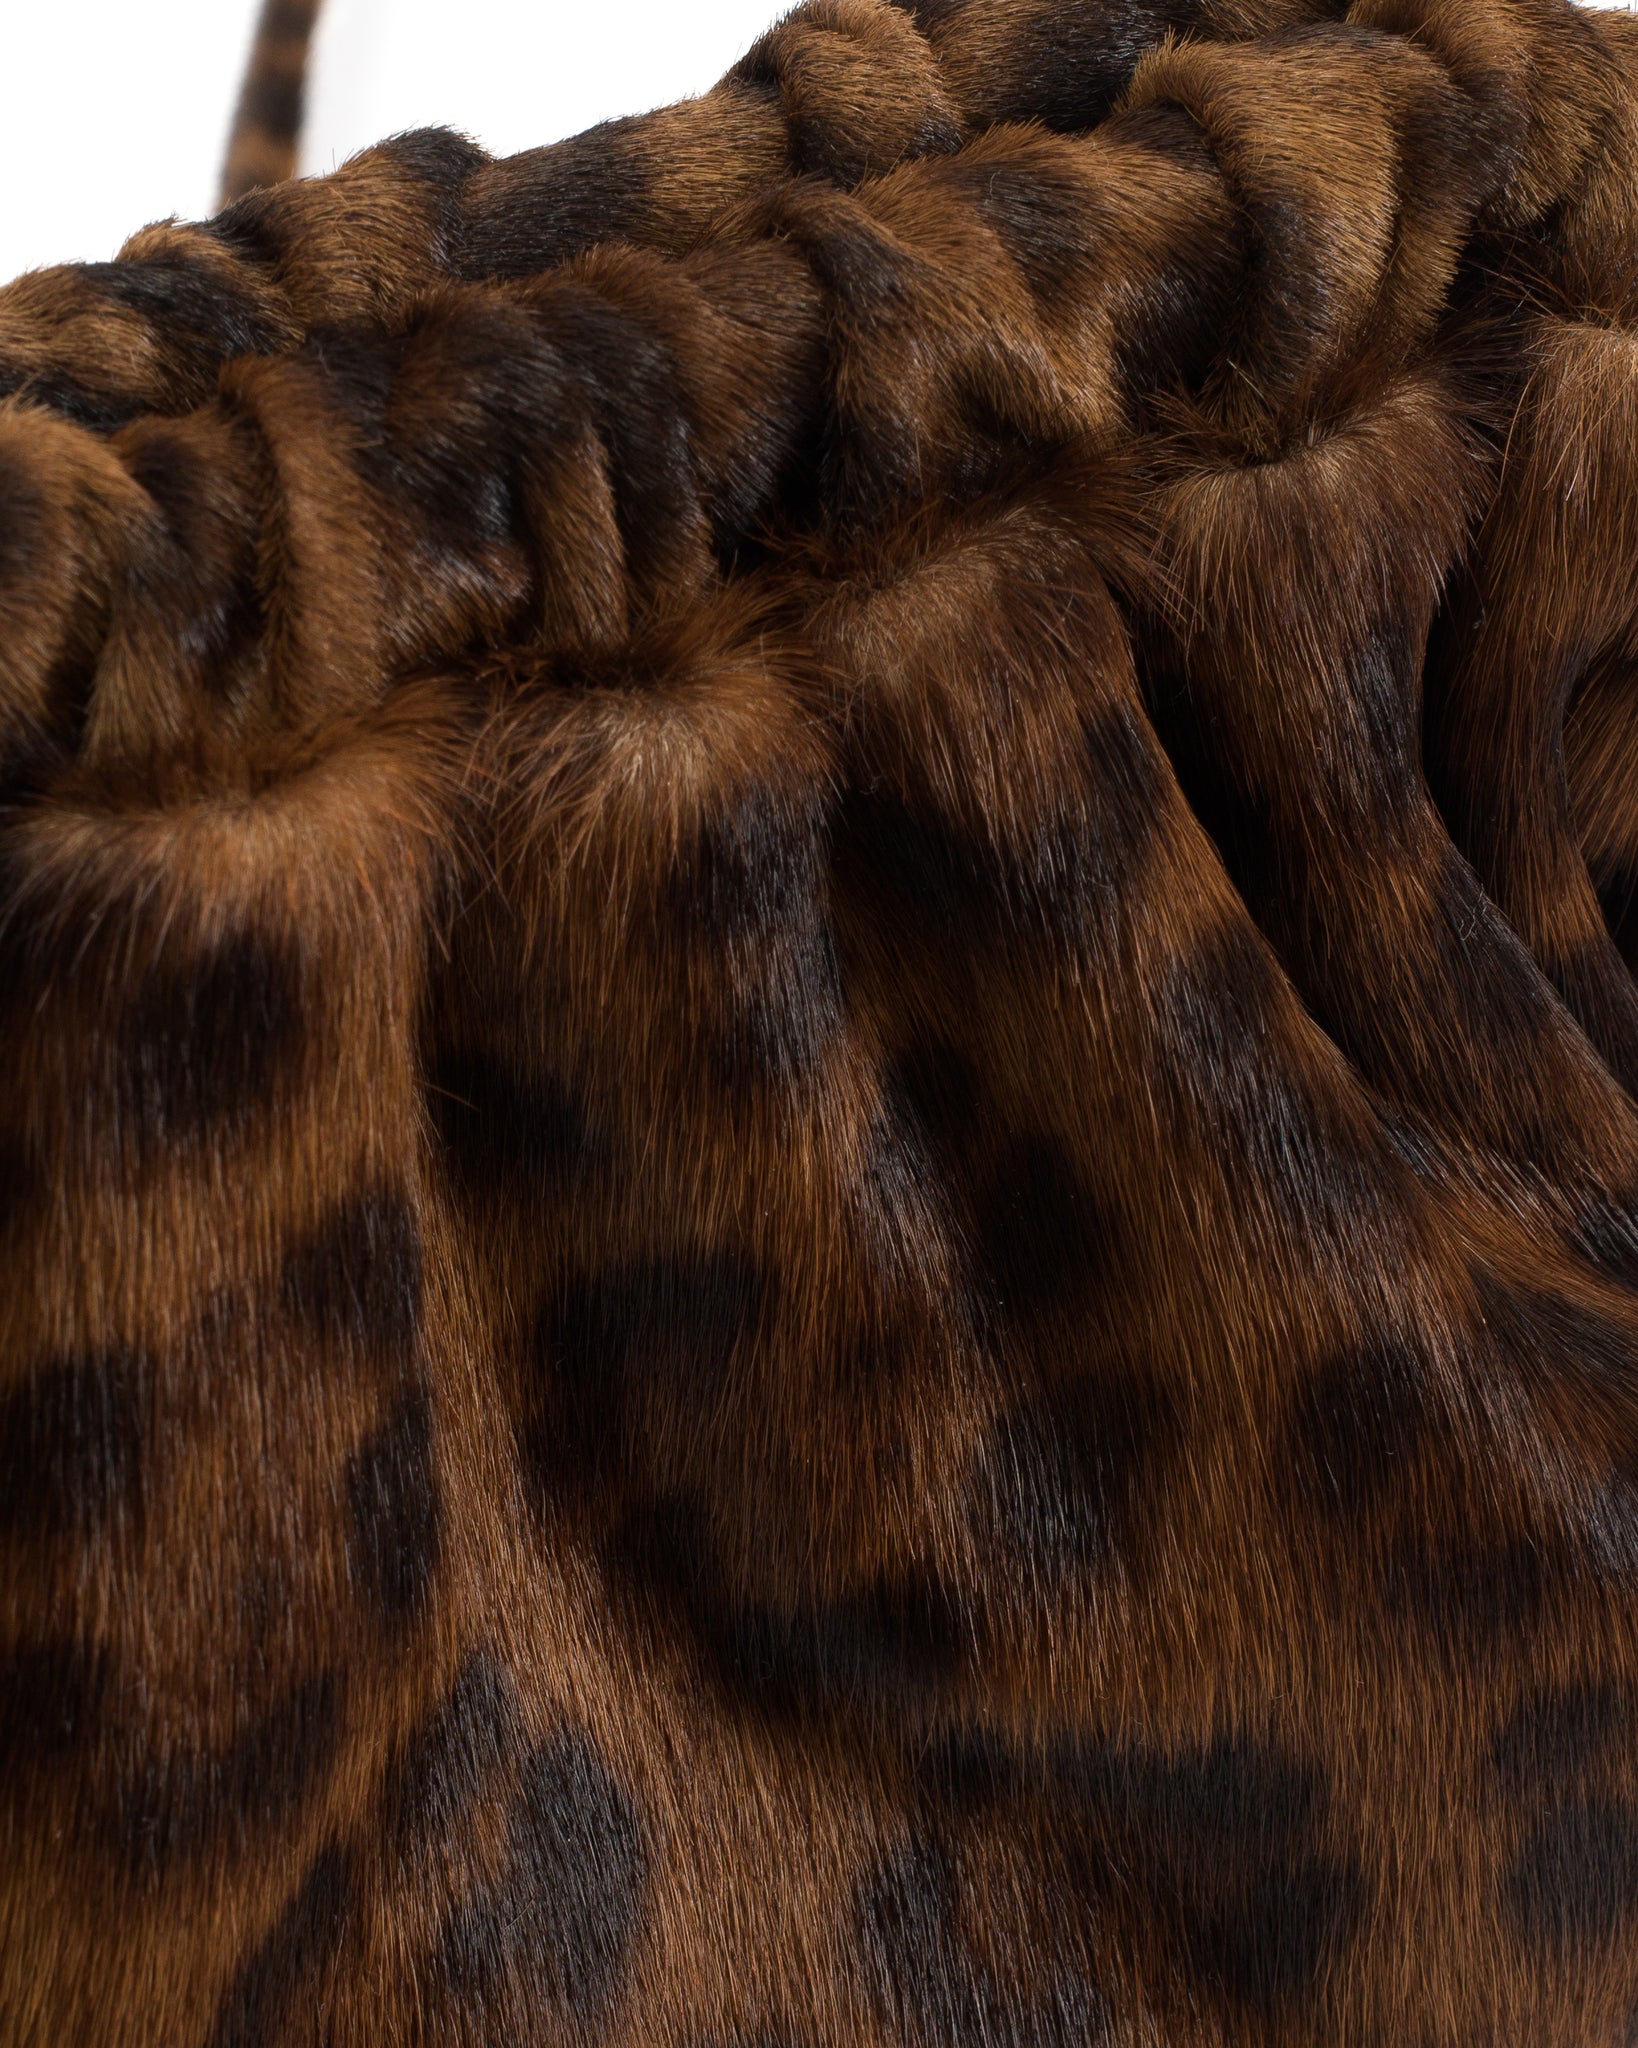 Hally grand cloud bag Calf hair Leopard - Anonymous Copenhagen